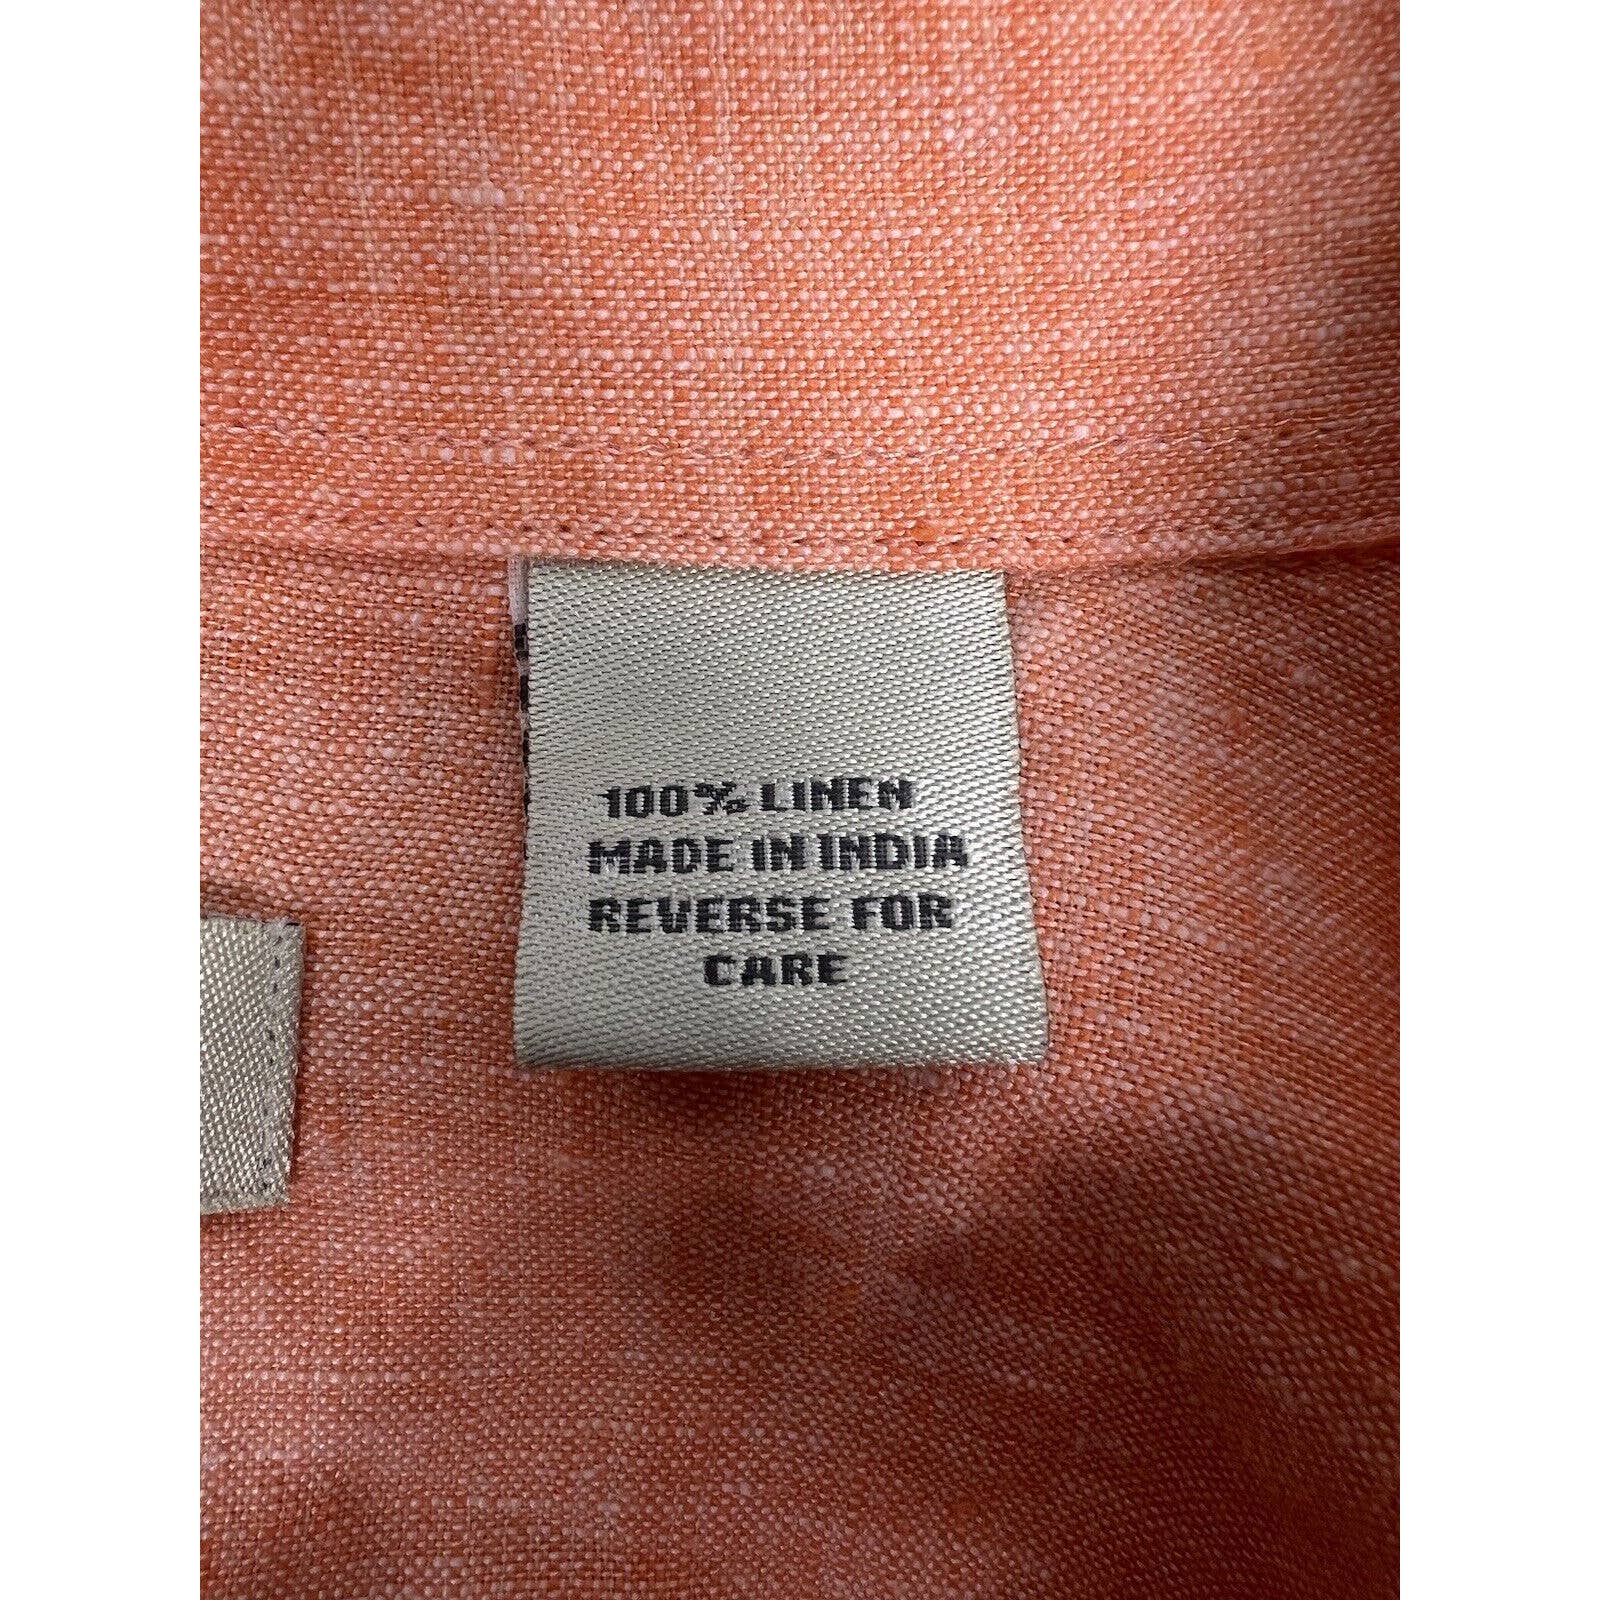 Peter Millar Linen Button Up Shirt Mens Large Long Sleeve Pastel Orange Relaxed